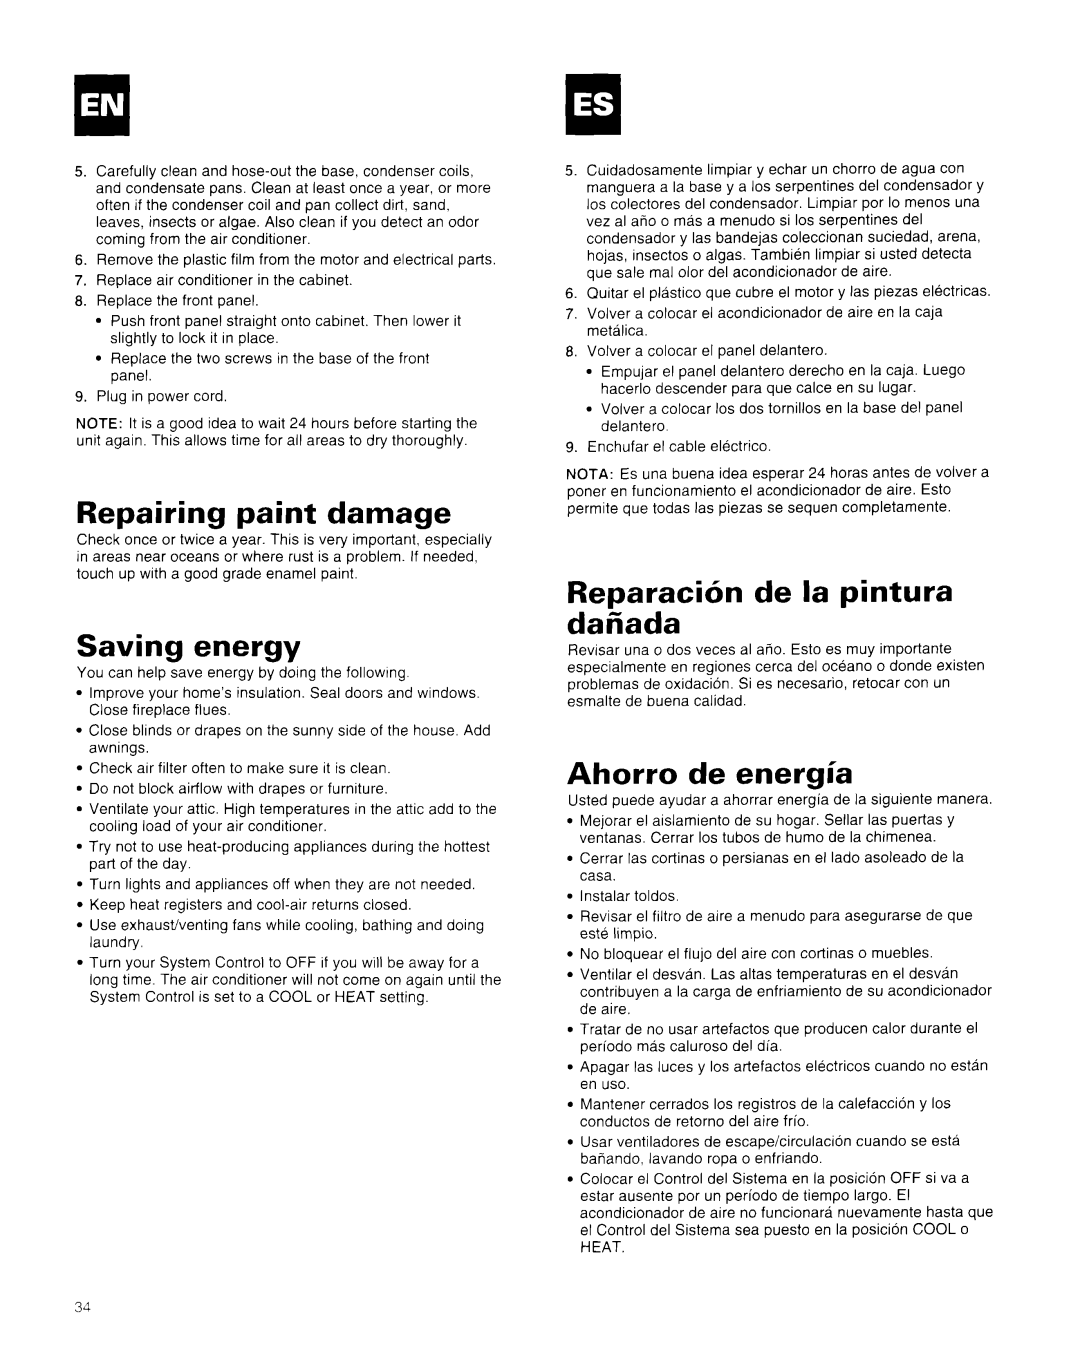 Whirlpool AR1800XA0 manual Repairing paint damage, Saving energy, Reparacibn de la pintura dairada, Ahorro de energia 